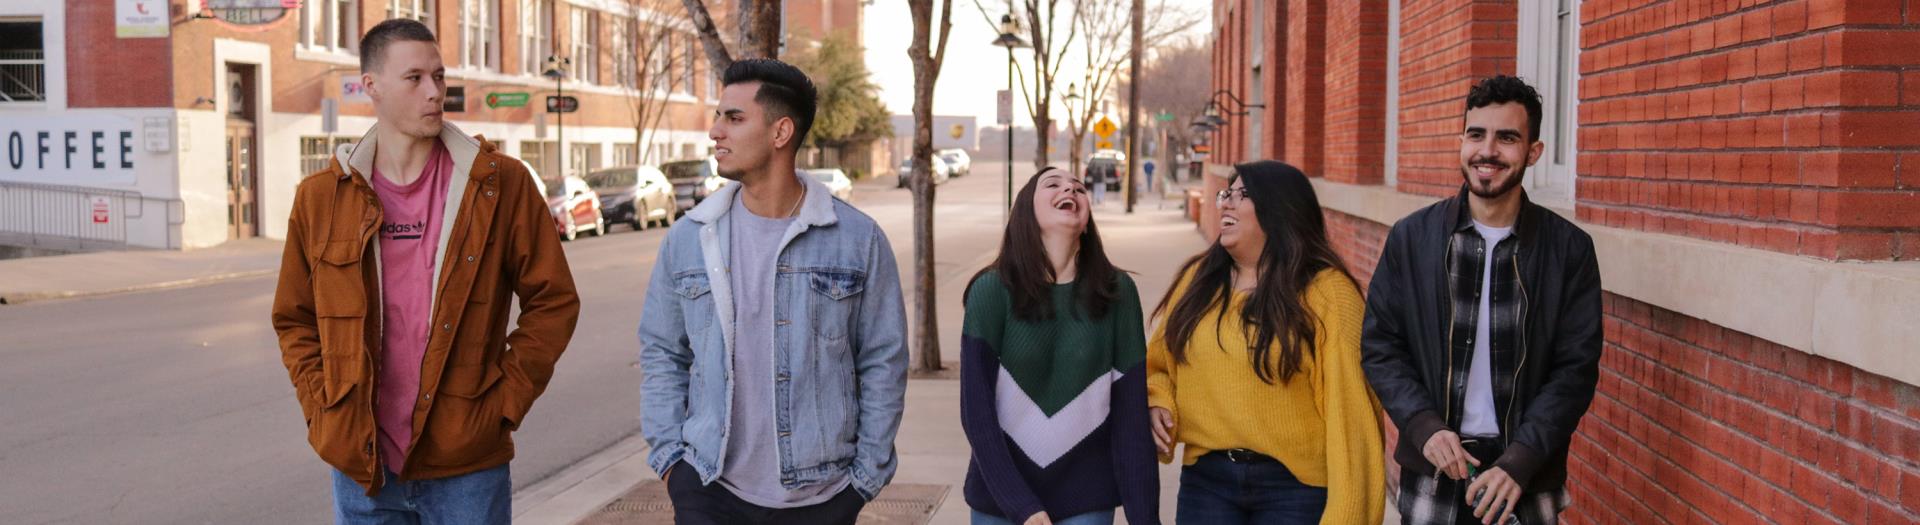 Five college students walking down a sidewalk